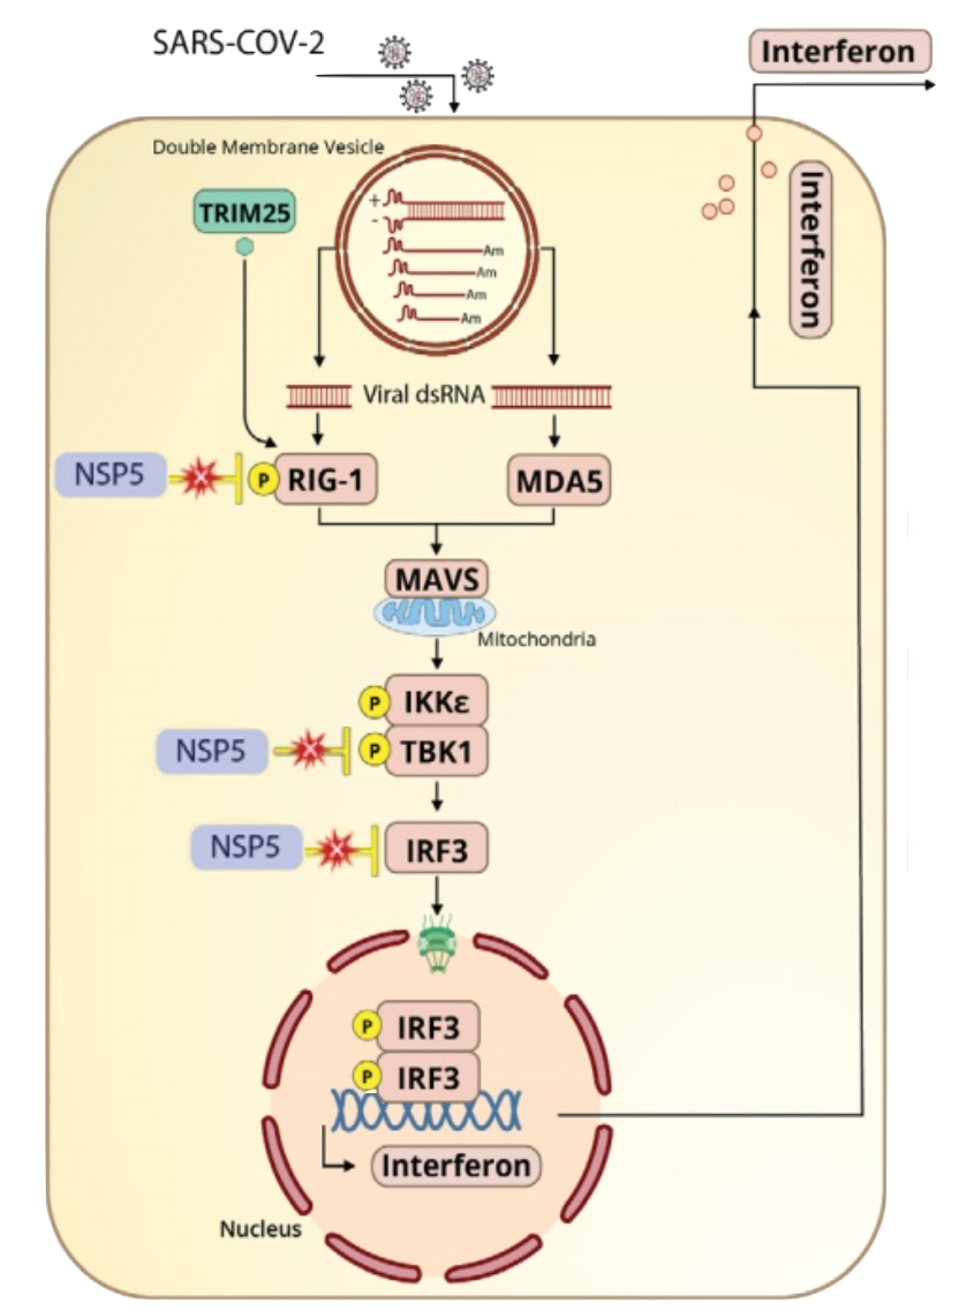 NSP5 interrupts interferon pathway